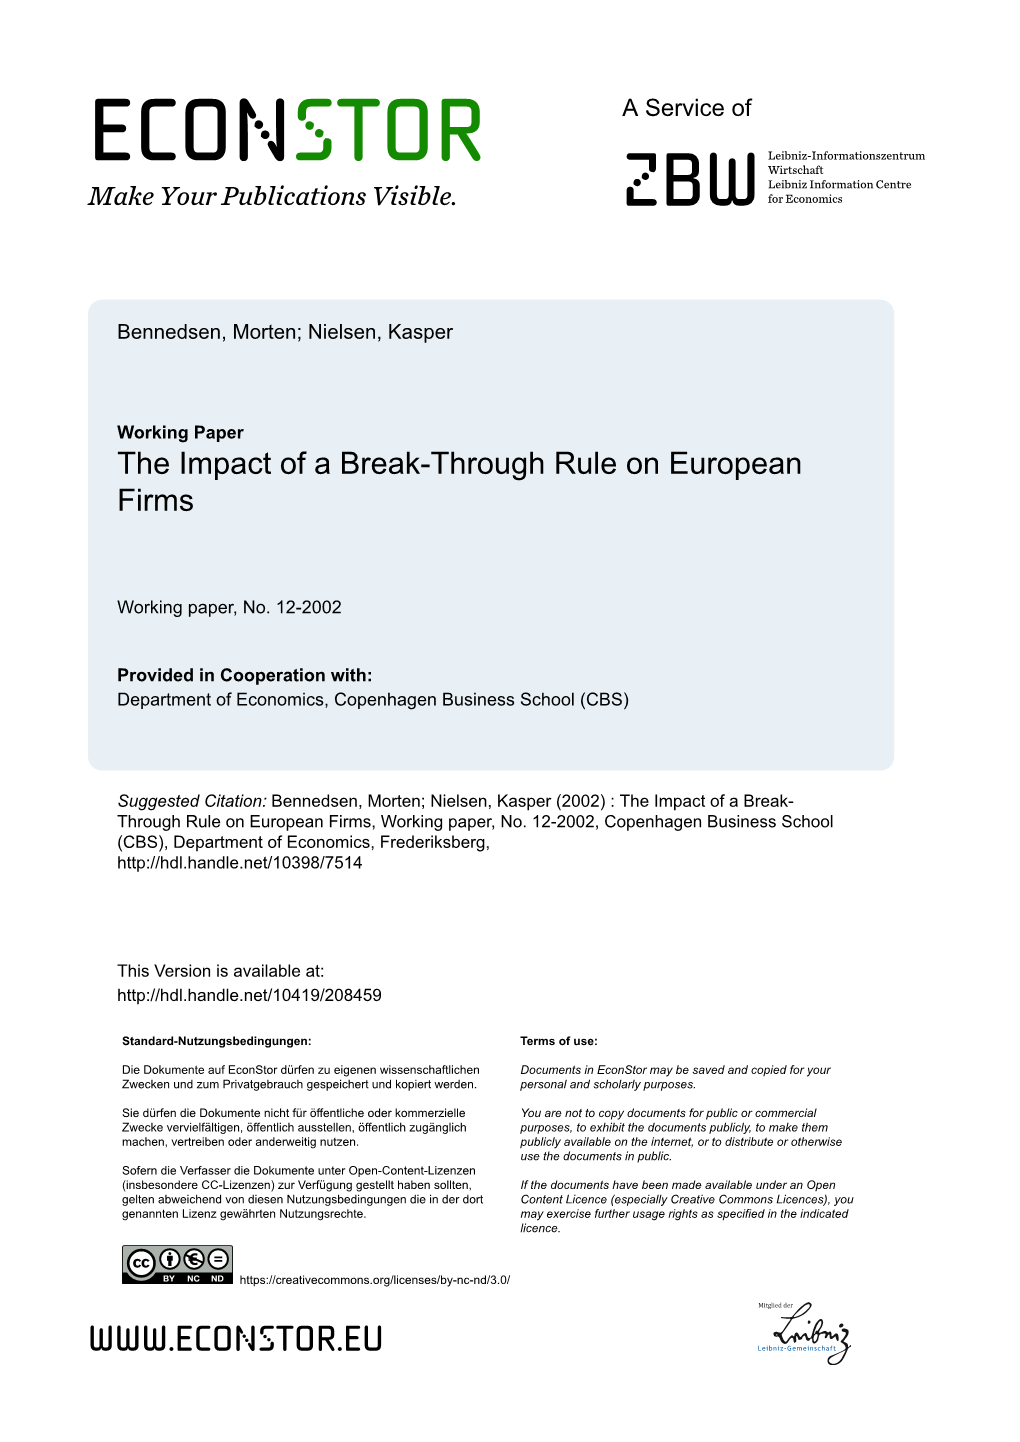 The Impact of a Break-Through Rule on European Firms